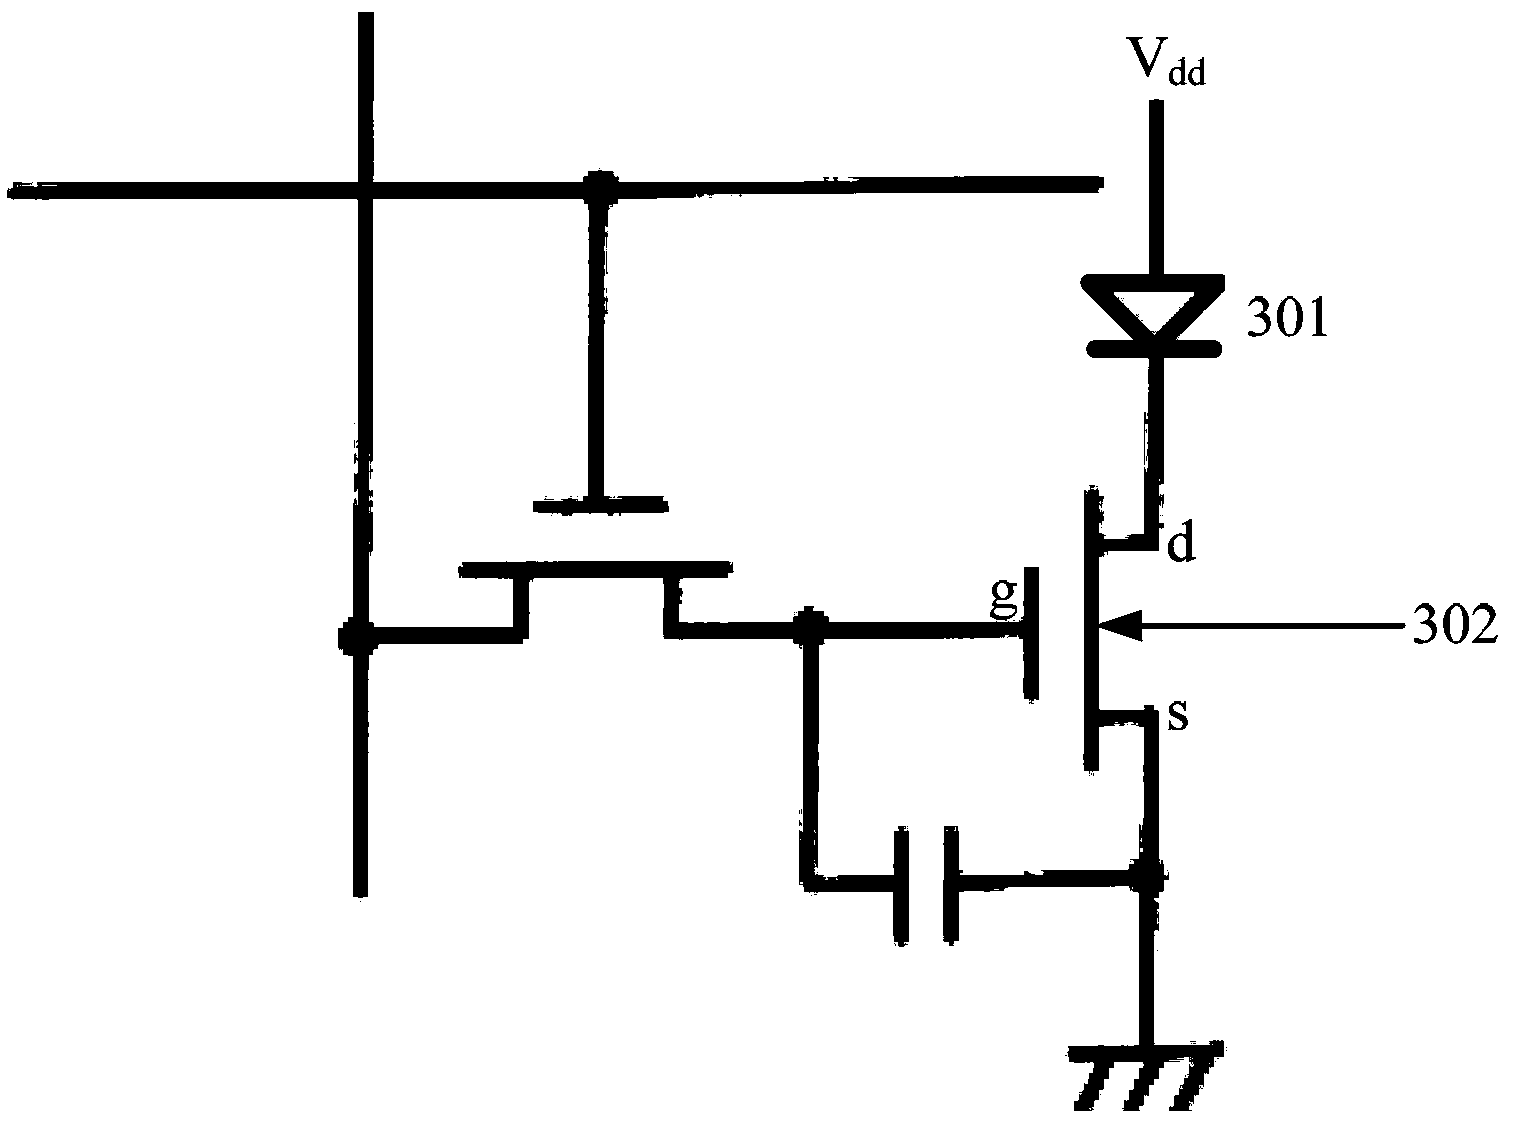 AMOLED (active matrix organic light emitting diode) and manufacturing method thereof